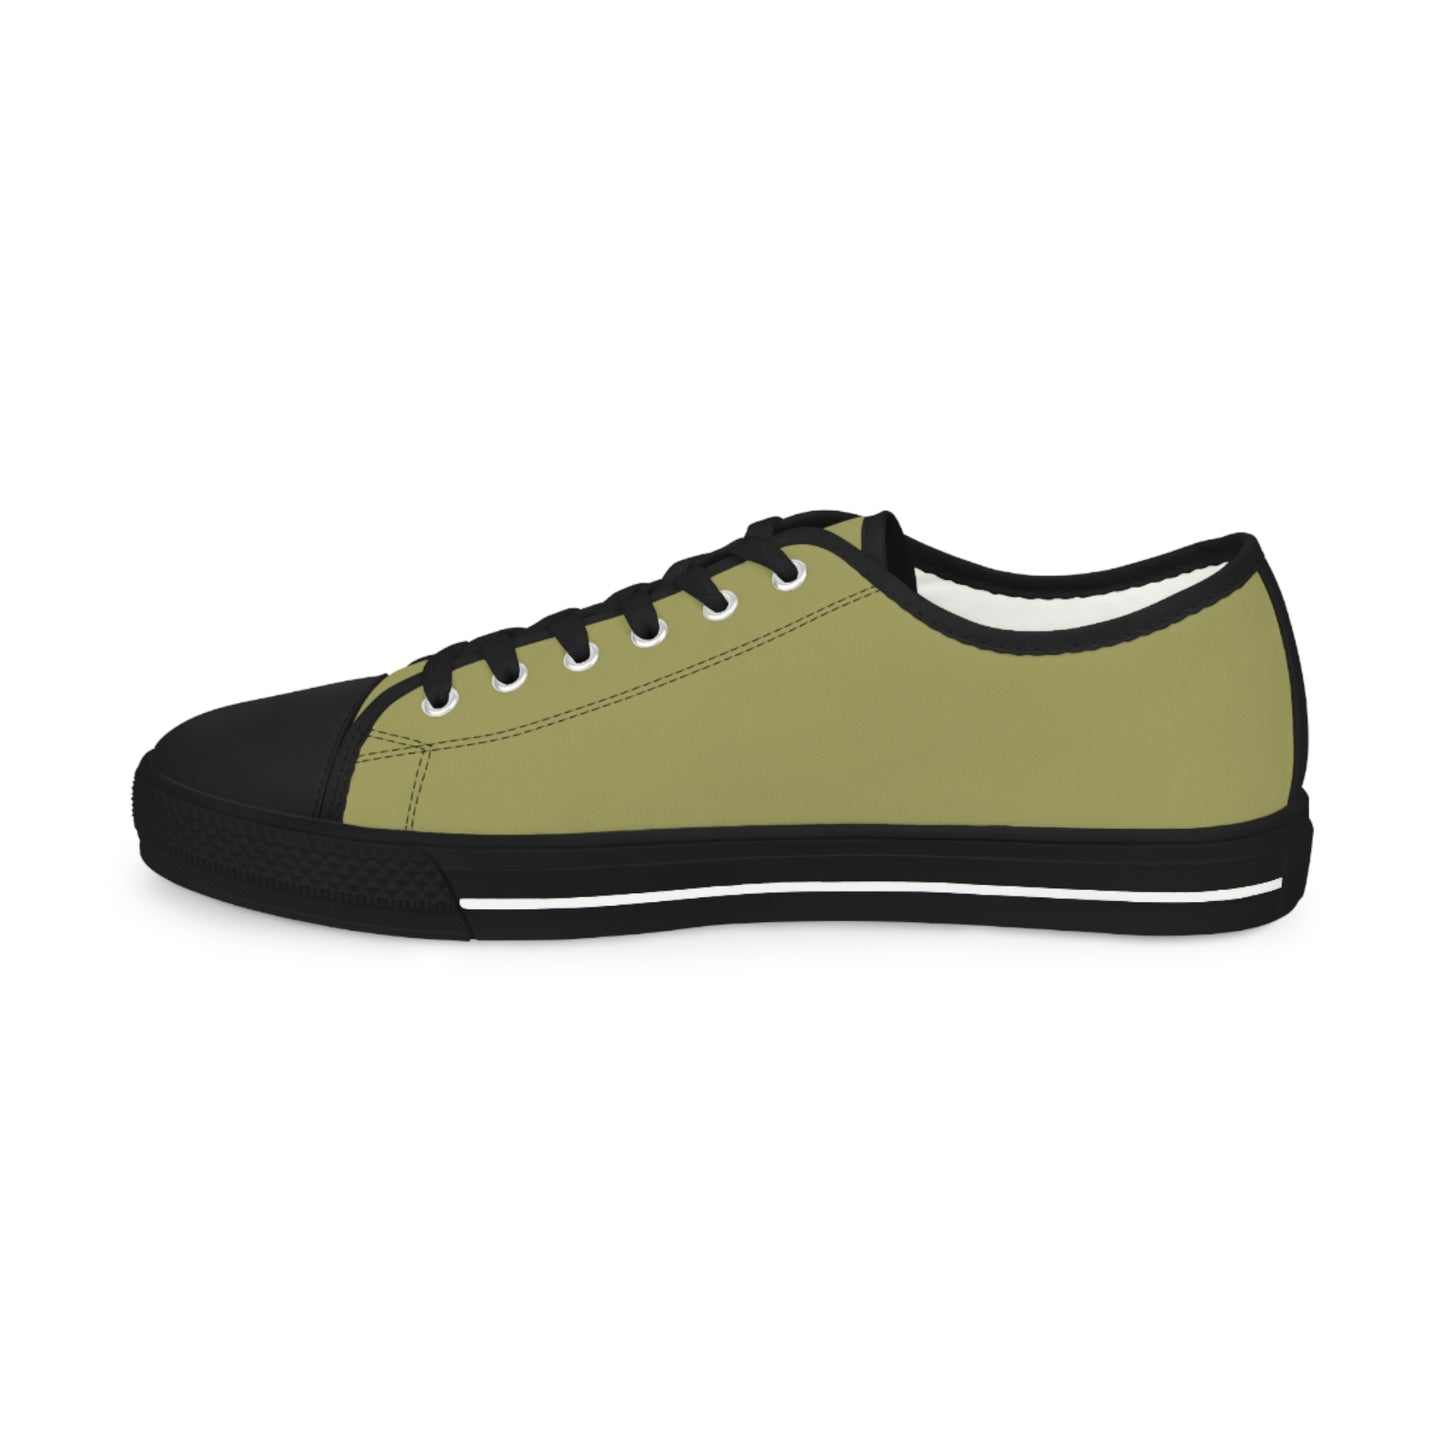 Men's Canvas Low Top Solid Color Sneakers - Light Moss US 14 Black sole